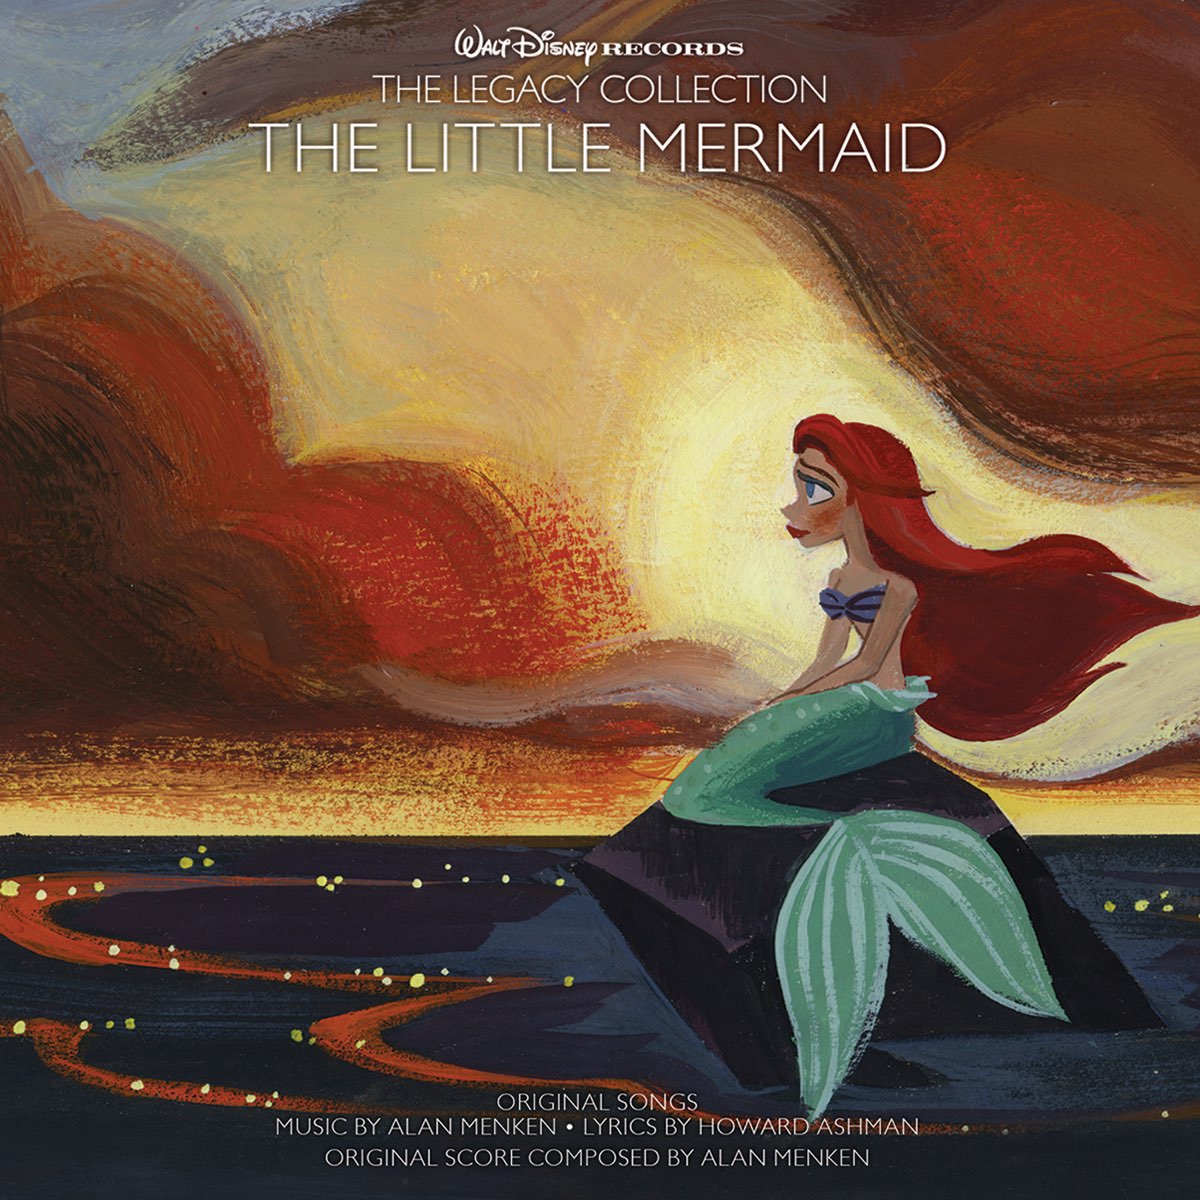 The Little Mermaid (Motion Picture Soundtrack) [Walt Disney Records